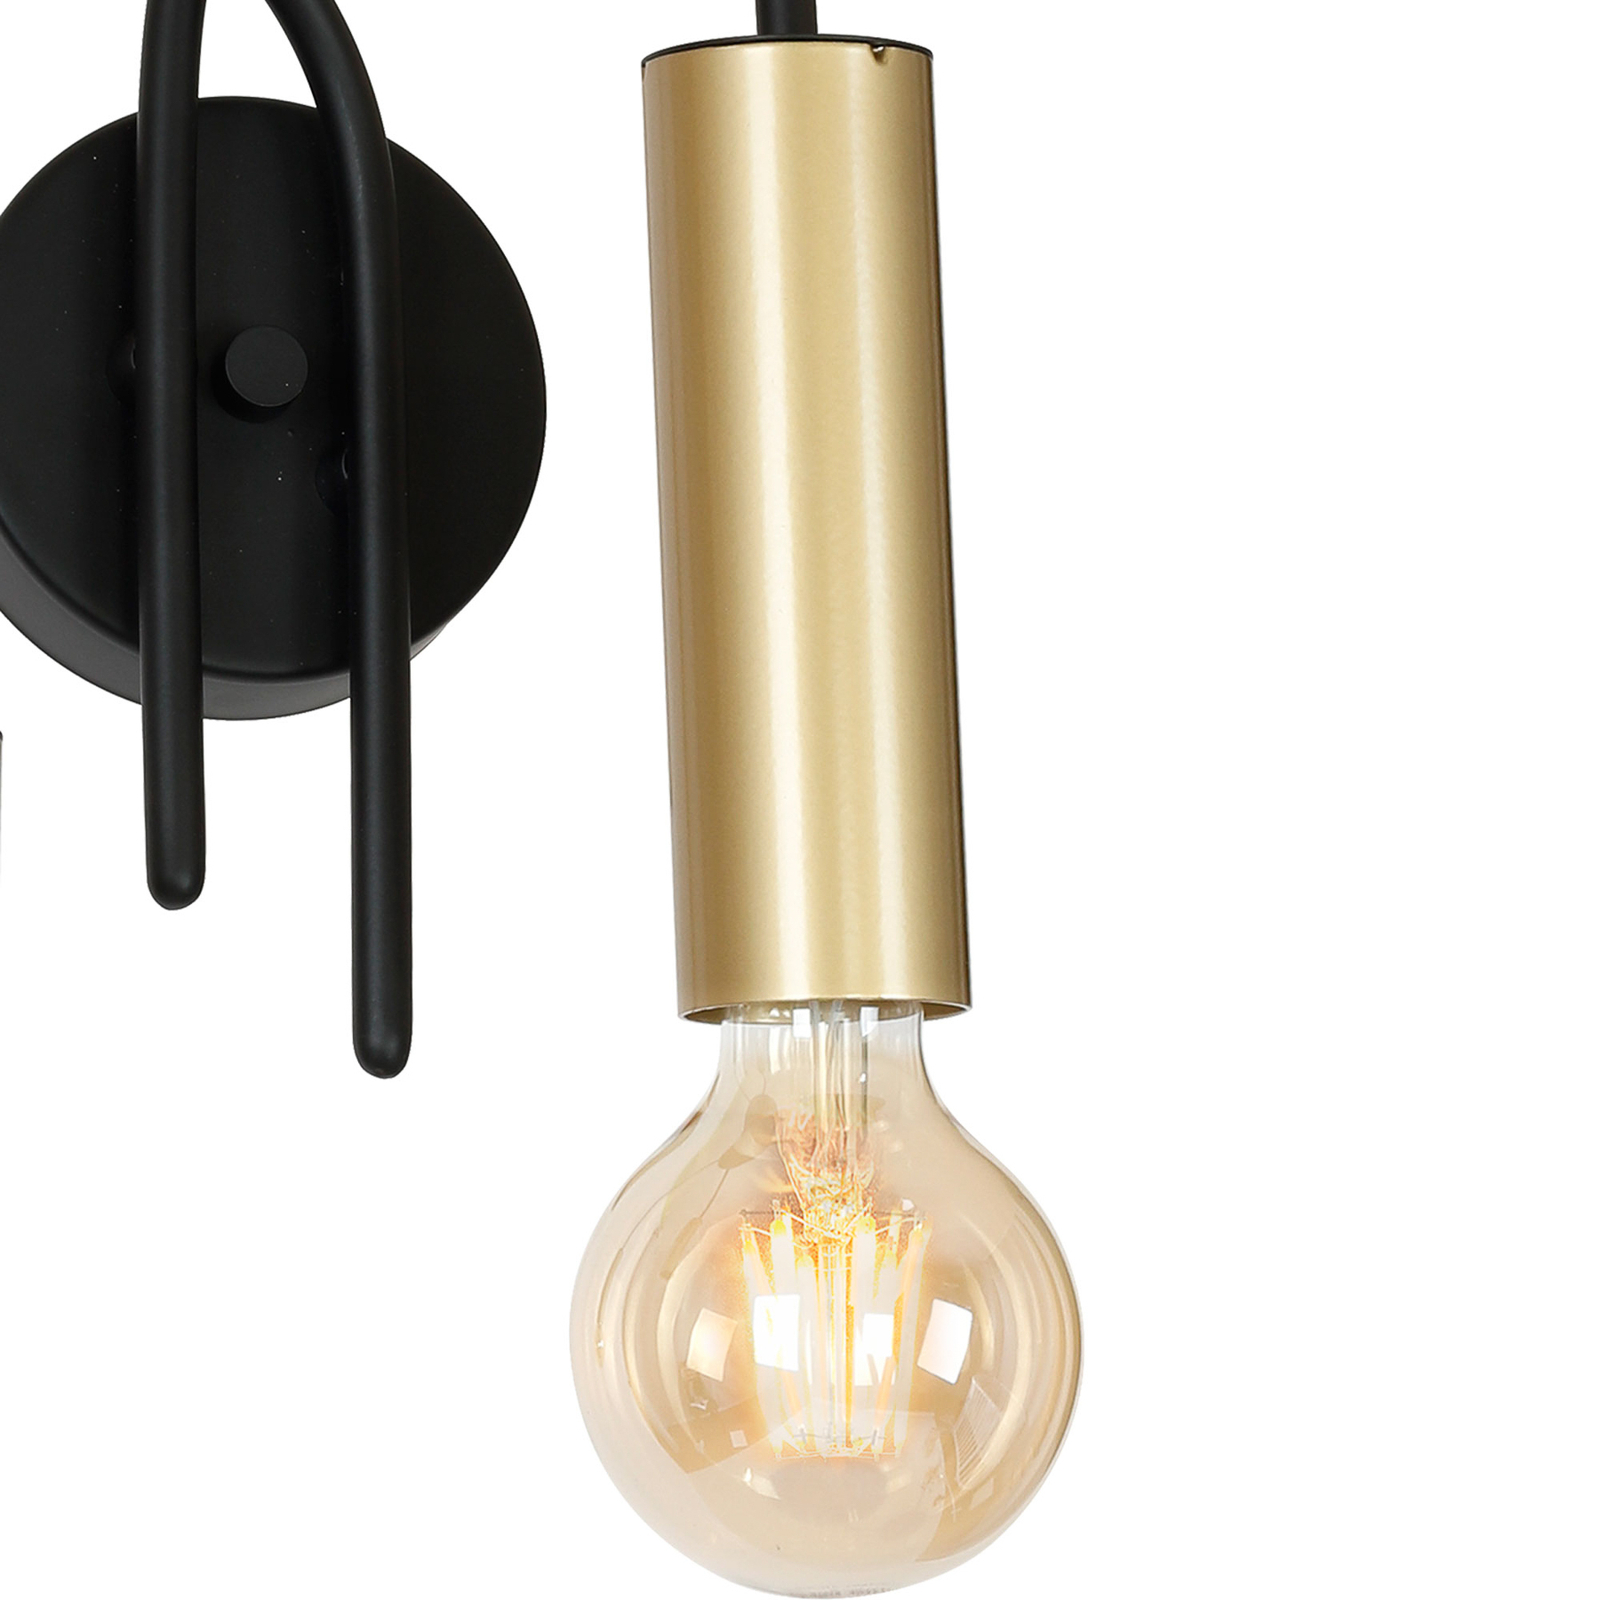 Aidan wall light, black/brass, 2-bulb